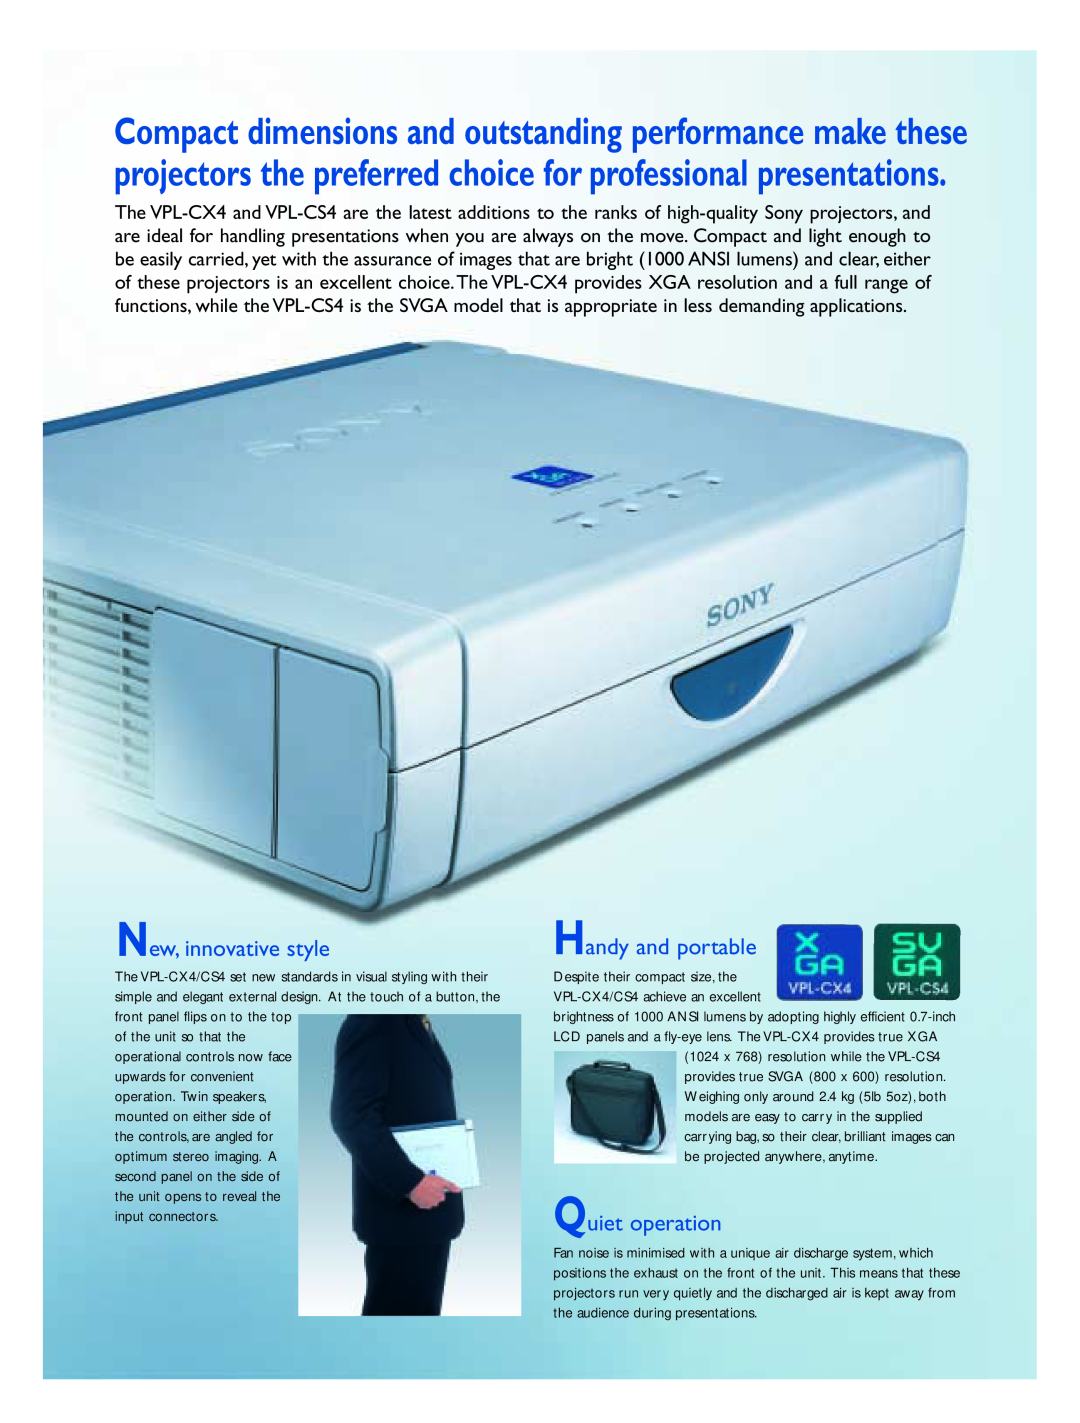 Sony VPL-CX4/CS4 brochure New, innovative style, Handy and portable, Quiet operation 